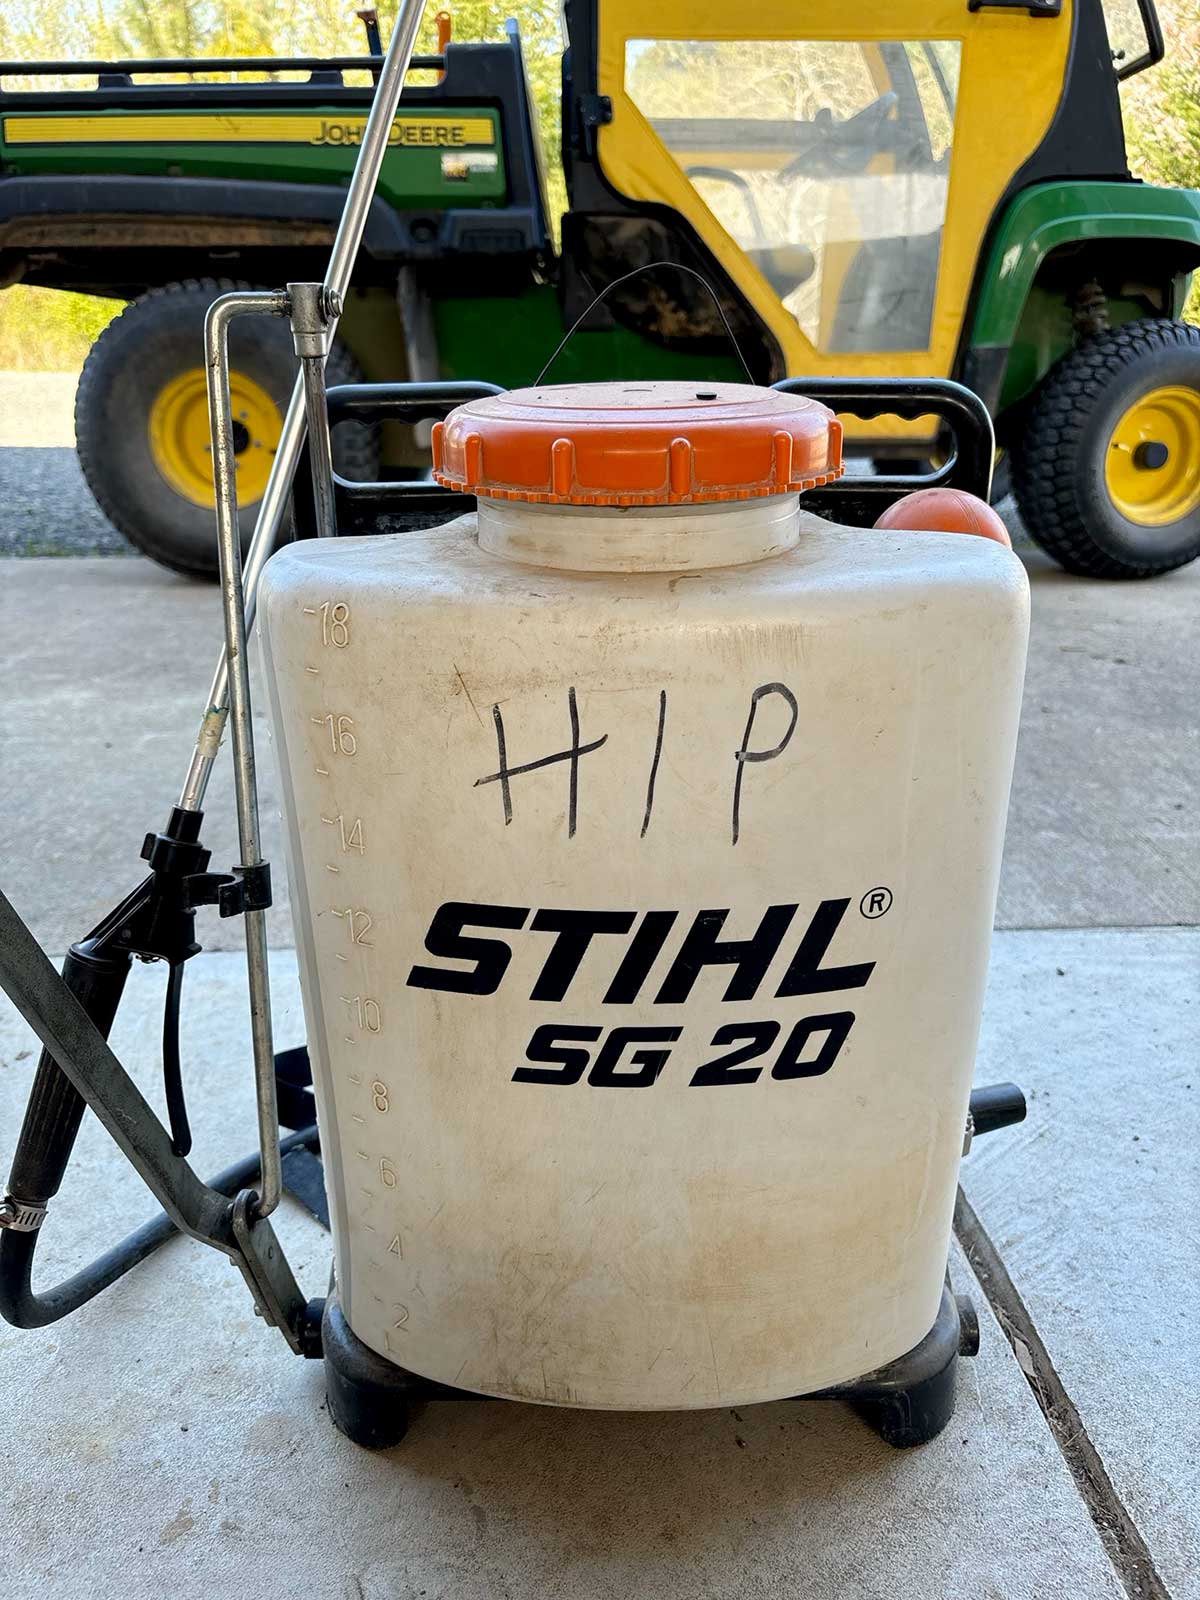 STIHL バックパック噴霧器装置の写真